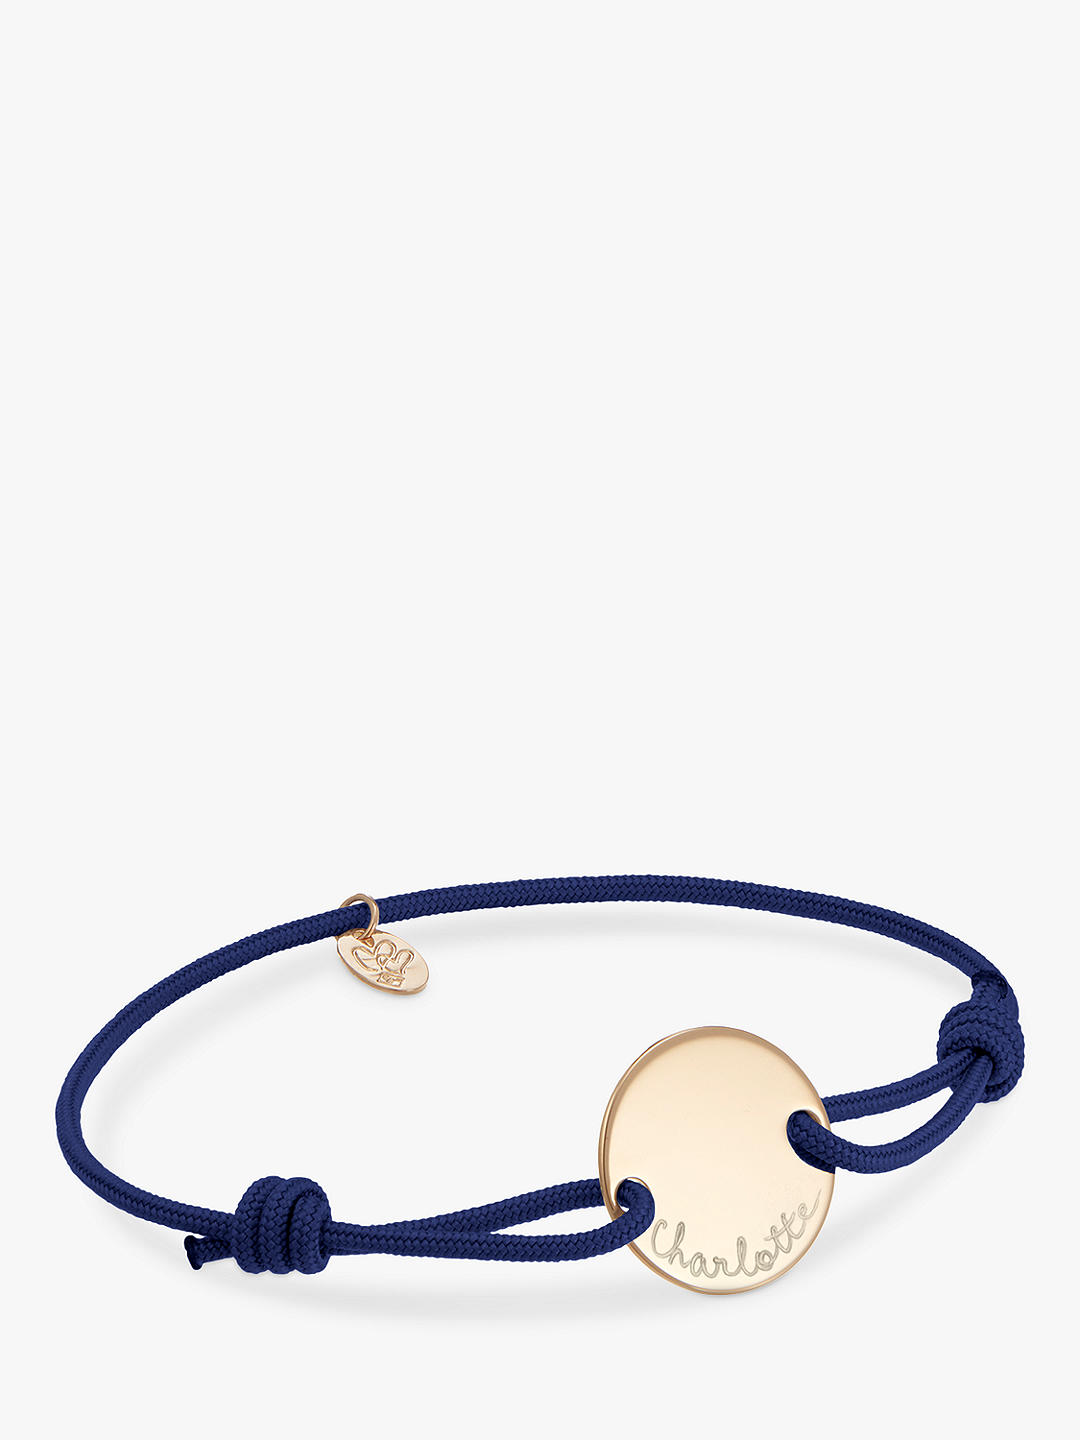 Merci Maman Personalised Pastille Braided Bracelet, Blue/Gold